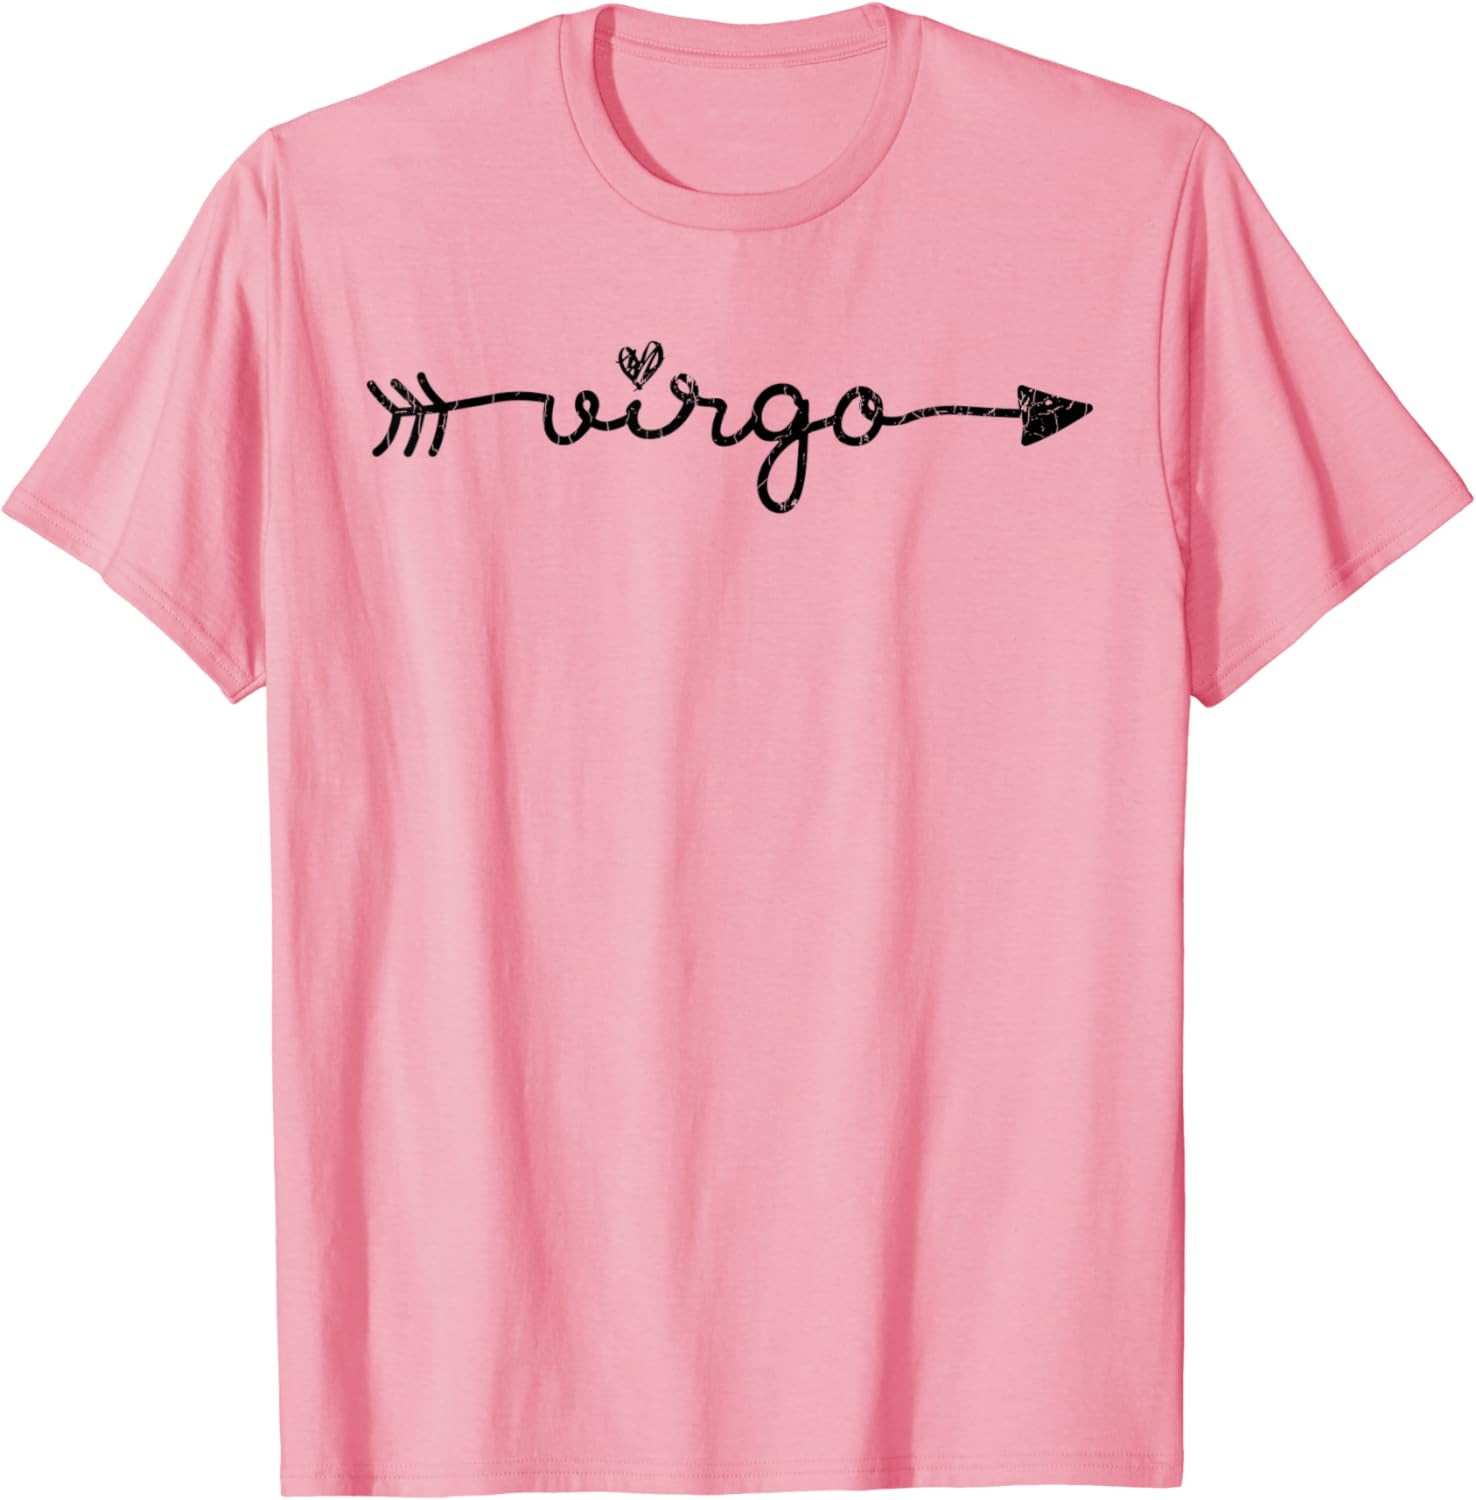 Virgo Apparel For Men And Women Funny Zodiac Sign Gift T-Shirt